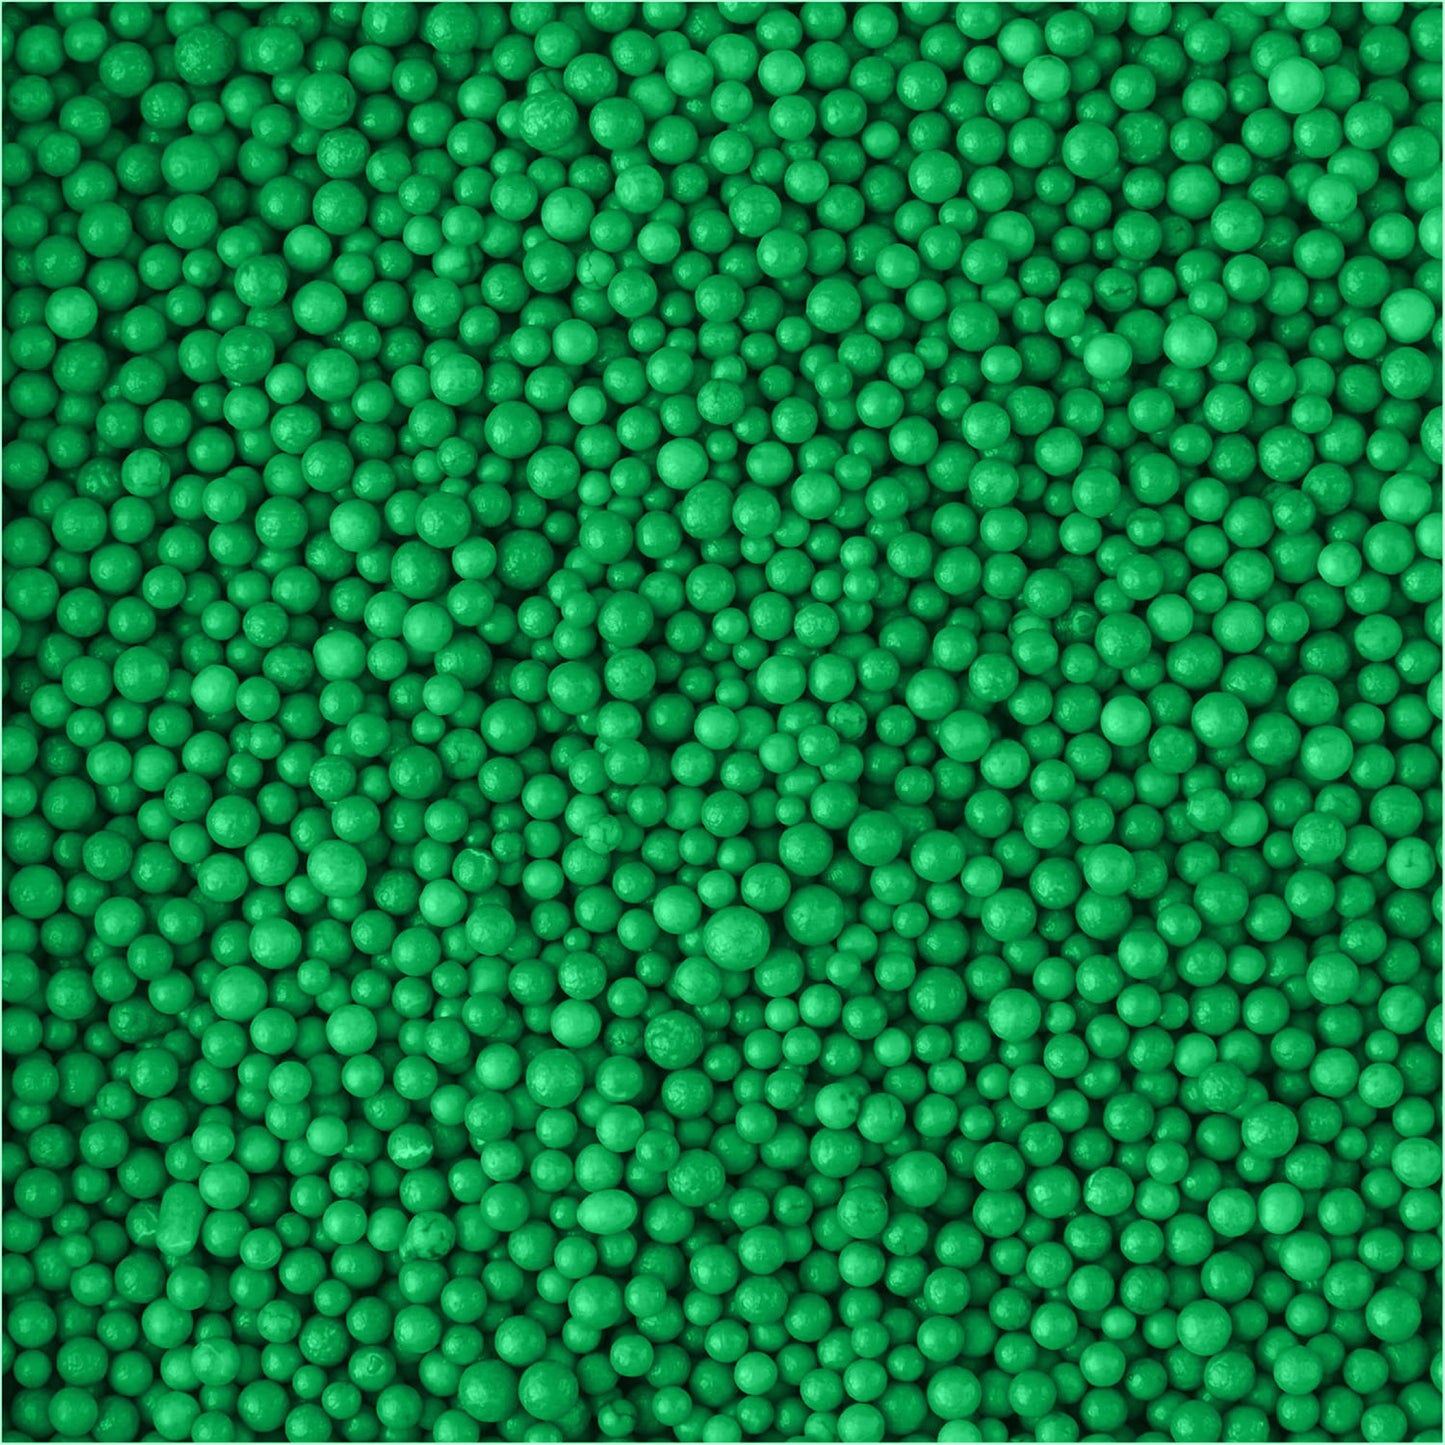 AC Food Crafting Bulk Polished Nonpariel Sprinkles 25lbs-Medium Green